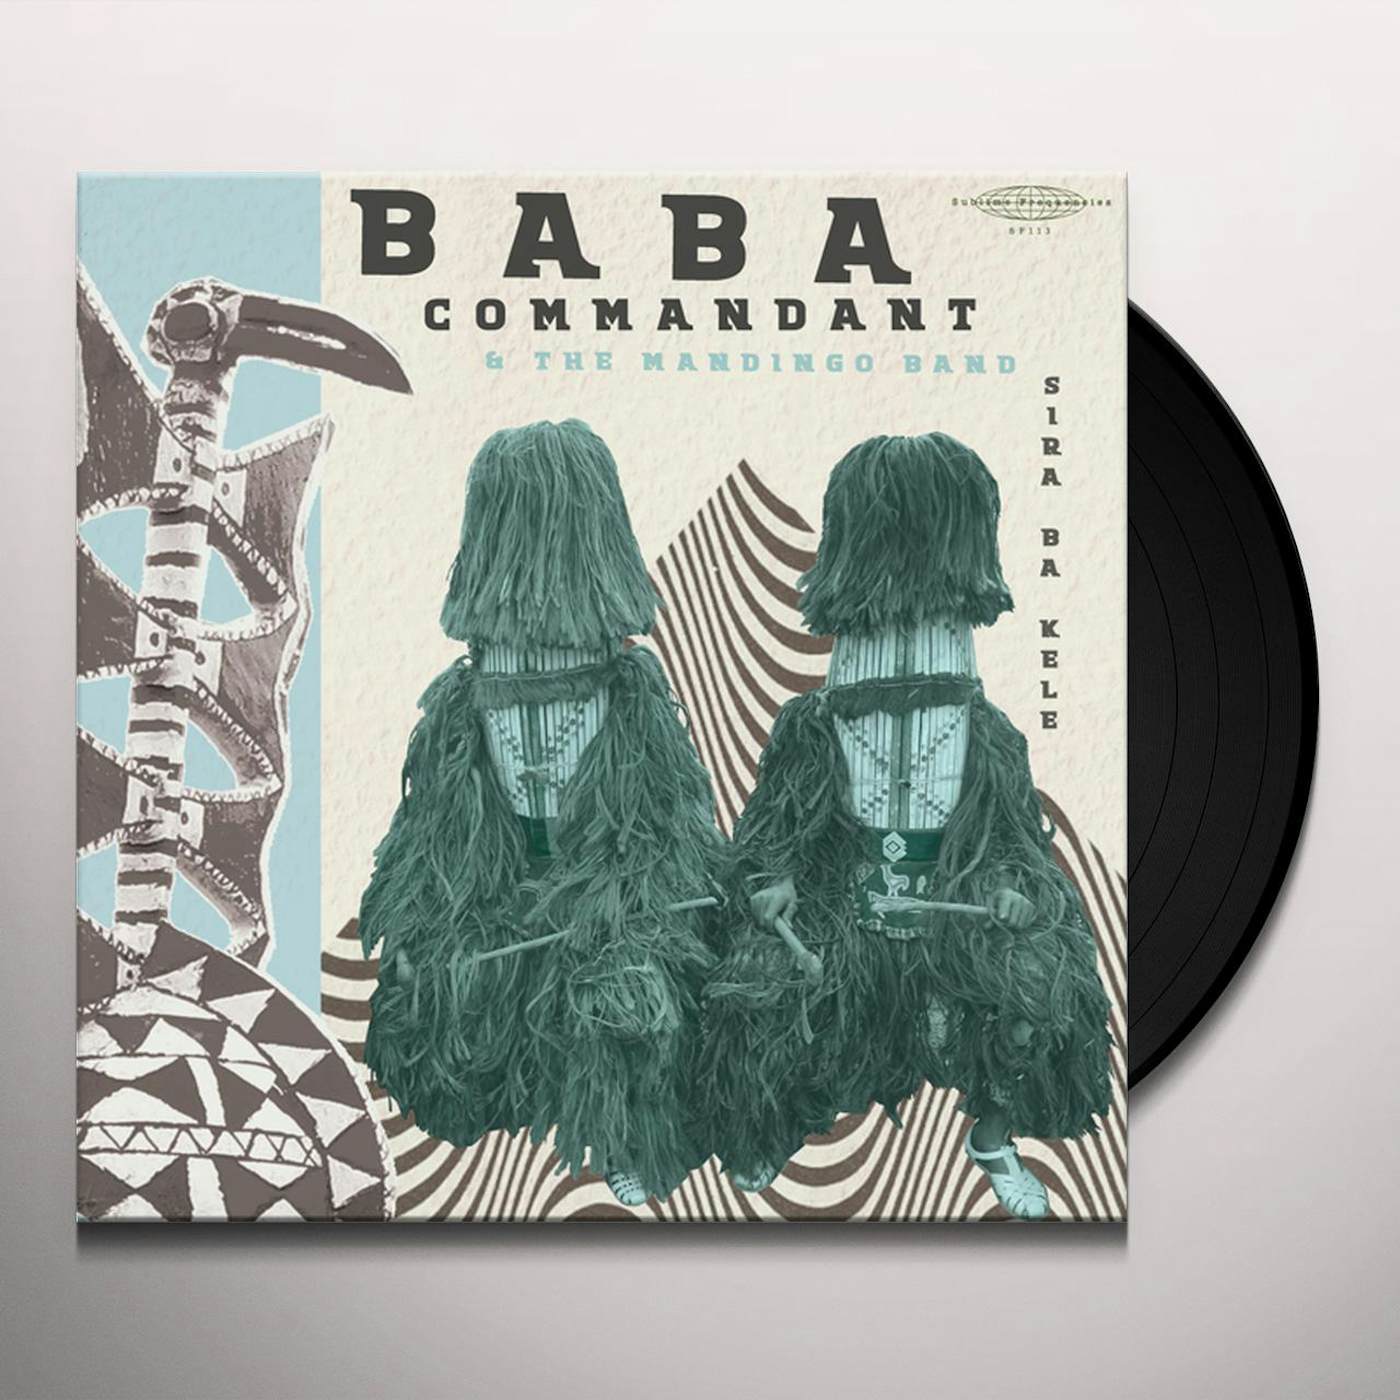 Baba Commandant And The Mandingo Band SIRI BA KELE Vinyl Record